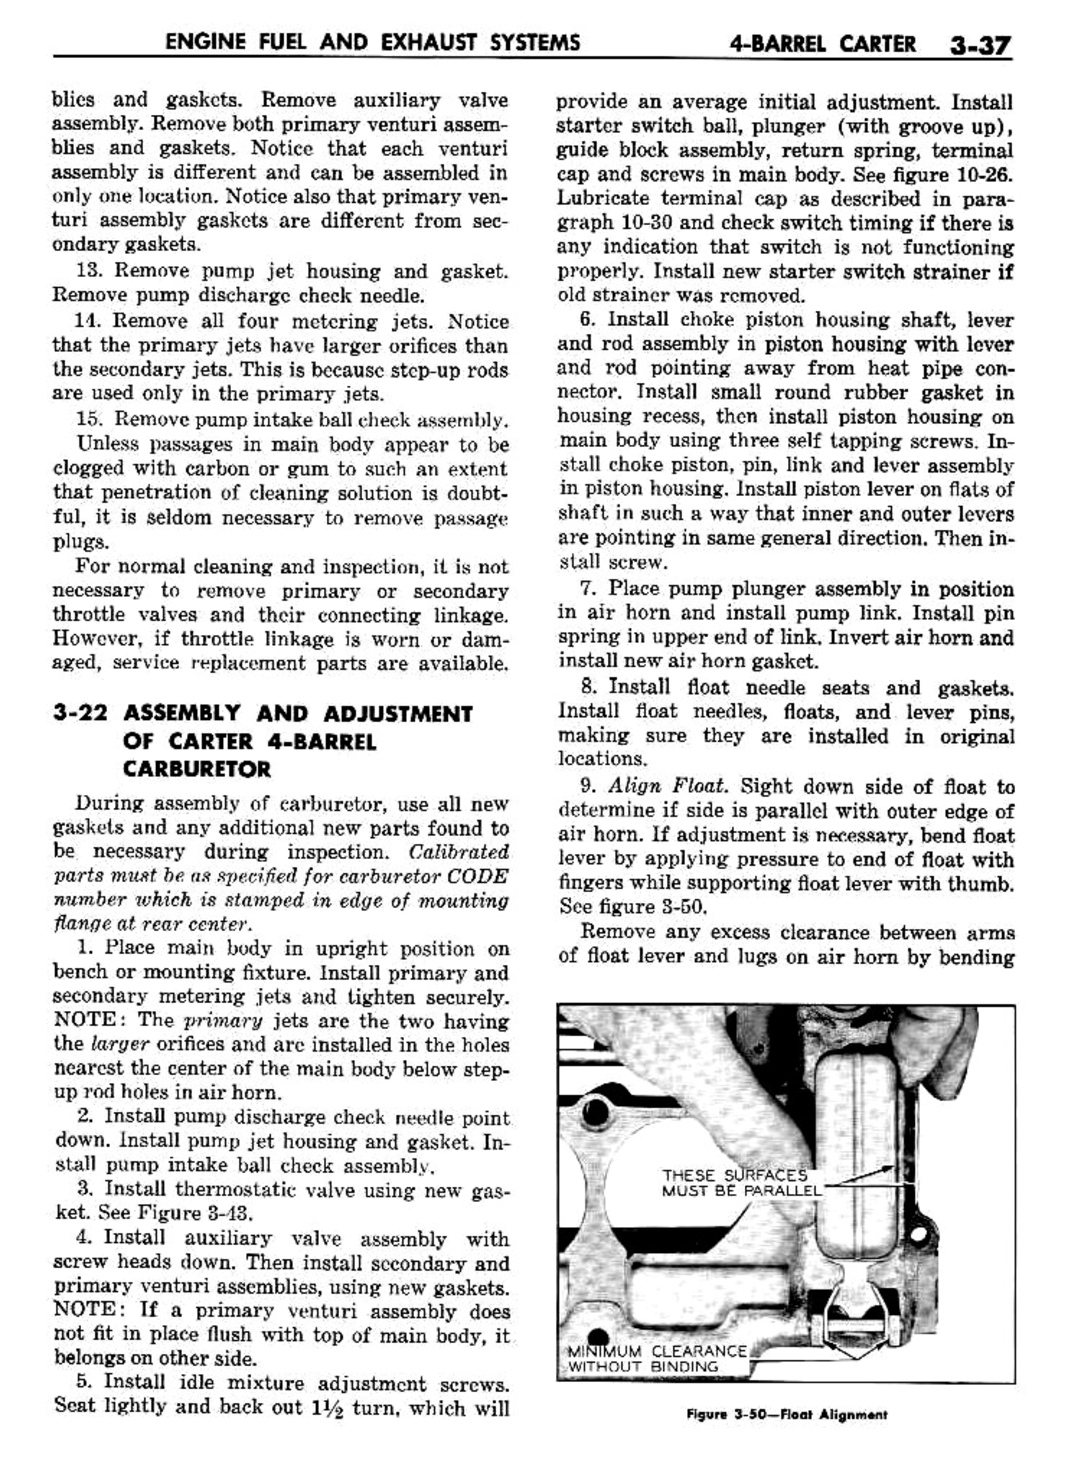 n_04 1960 Buick Shop Manual - Engine Fuel & Exhaust-037-037.jpg